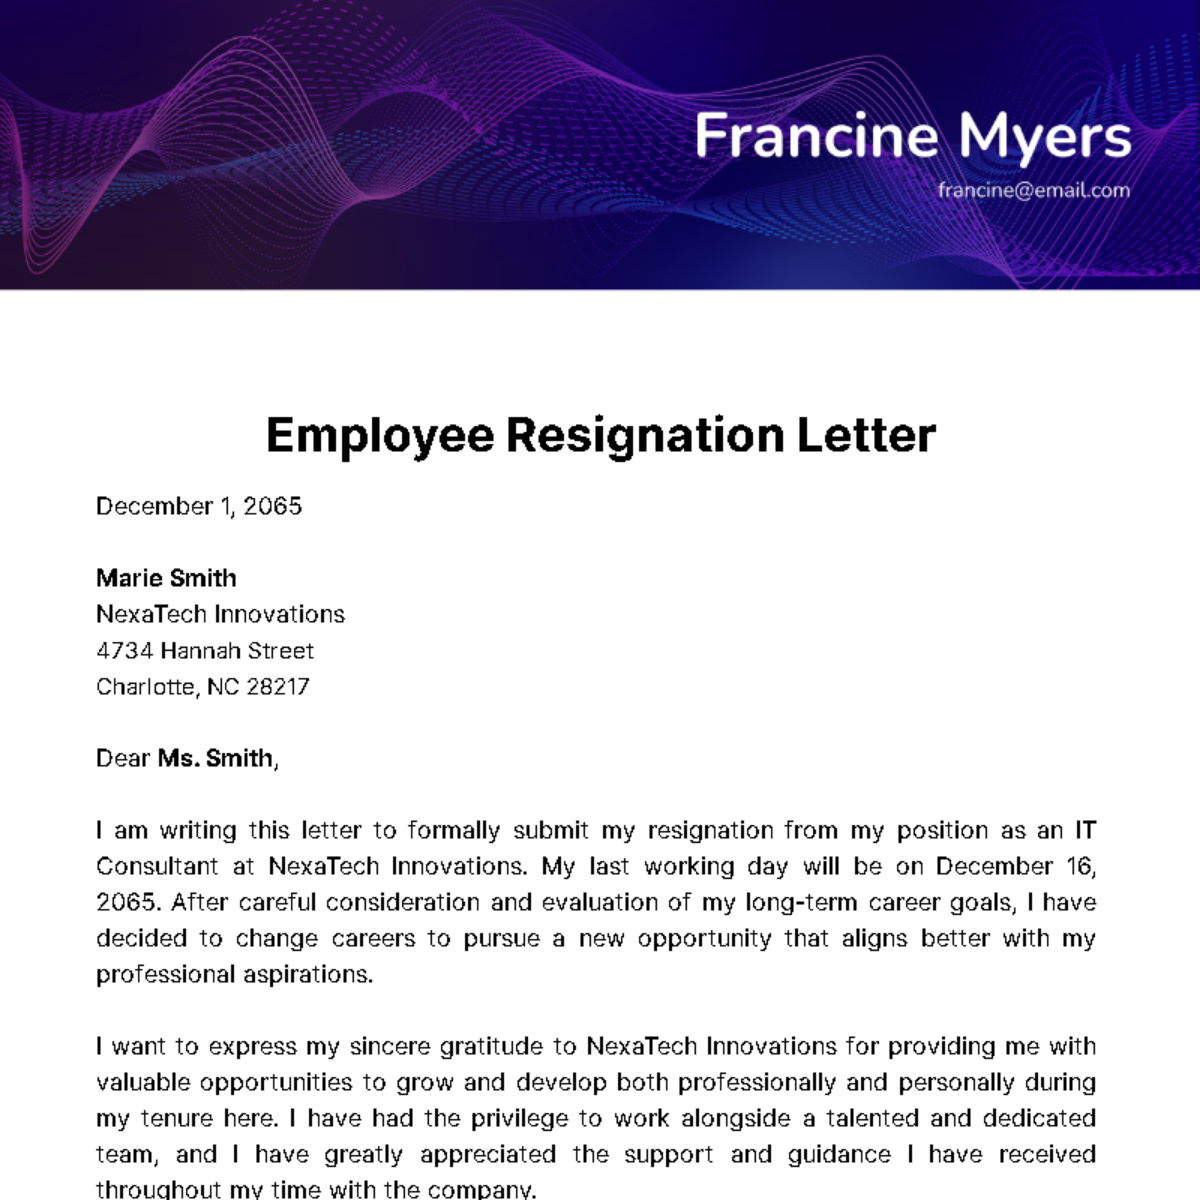 Employee Resignation Letter Template